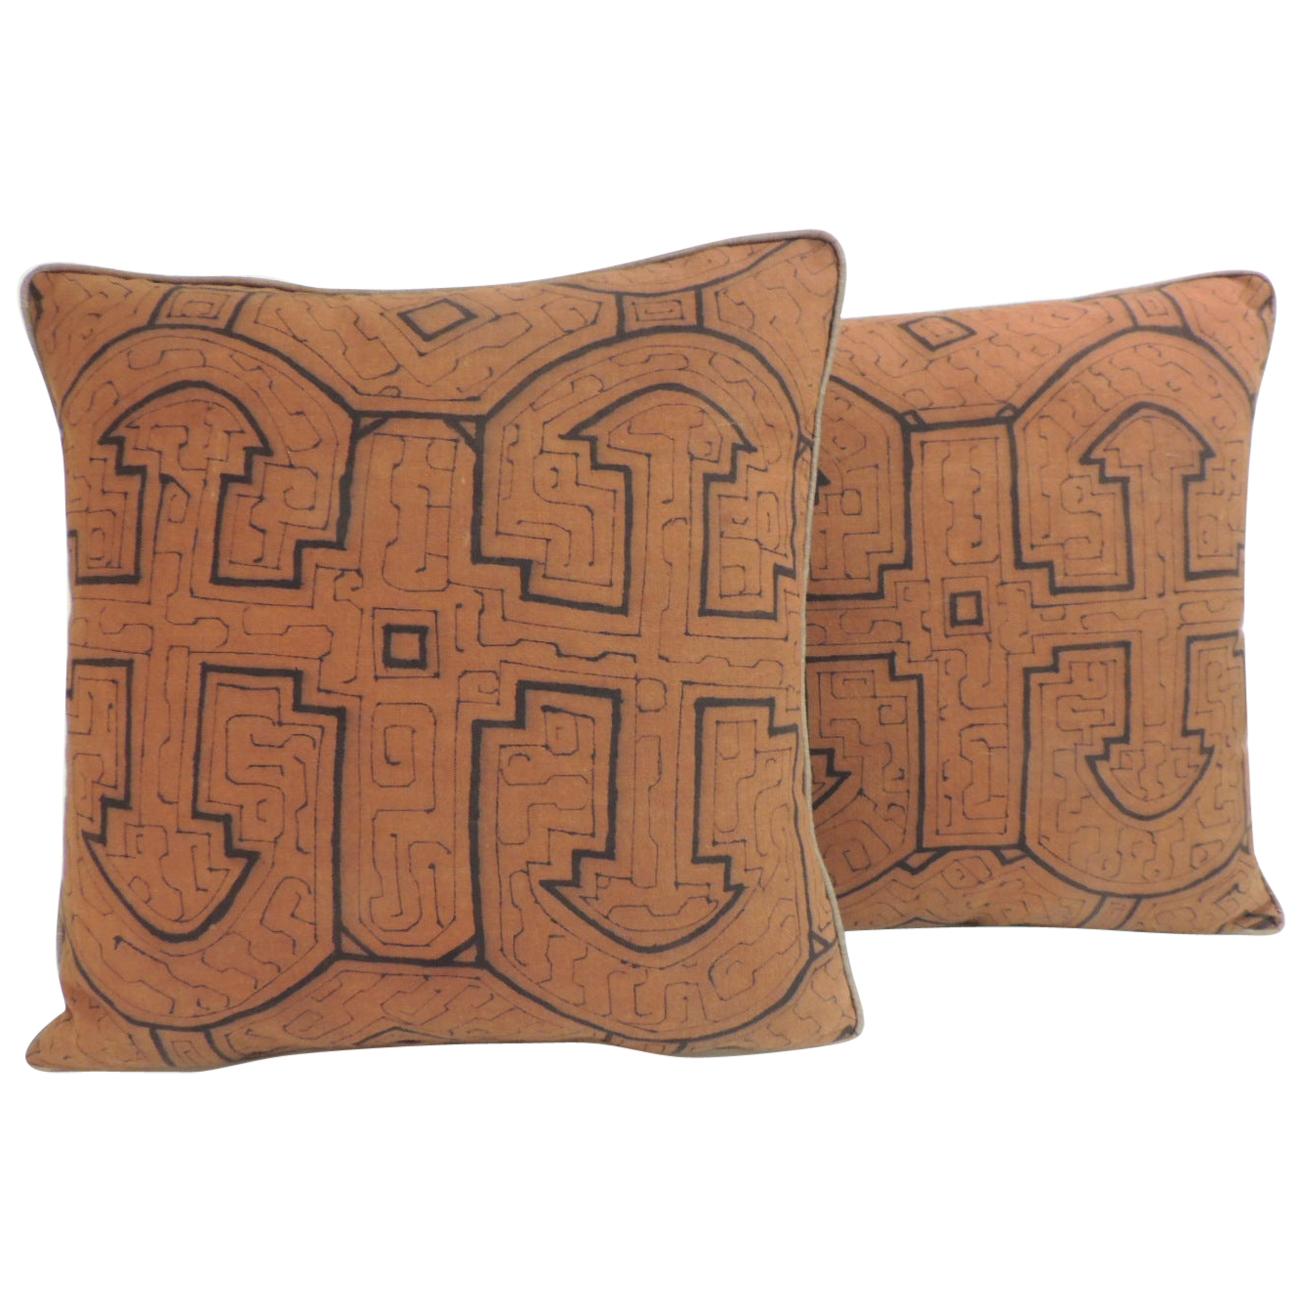 Graphic Tribal Peruvian Textile in Orange and Black Decorative Pillows #3, Pair